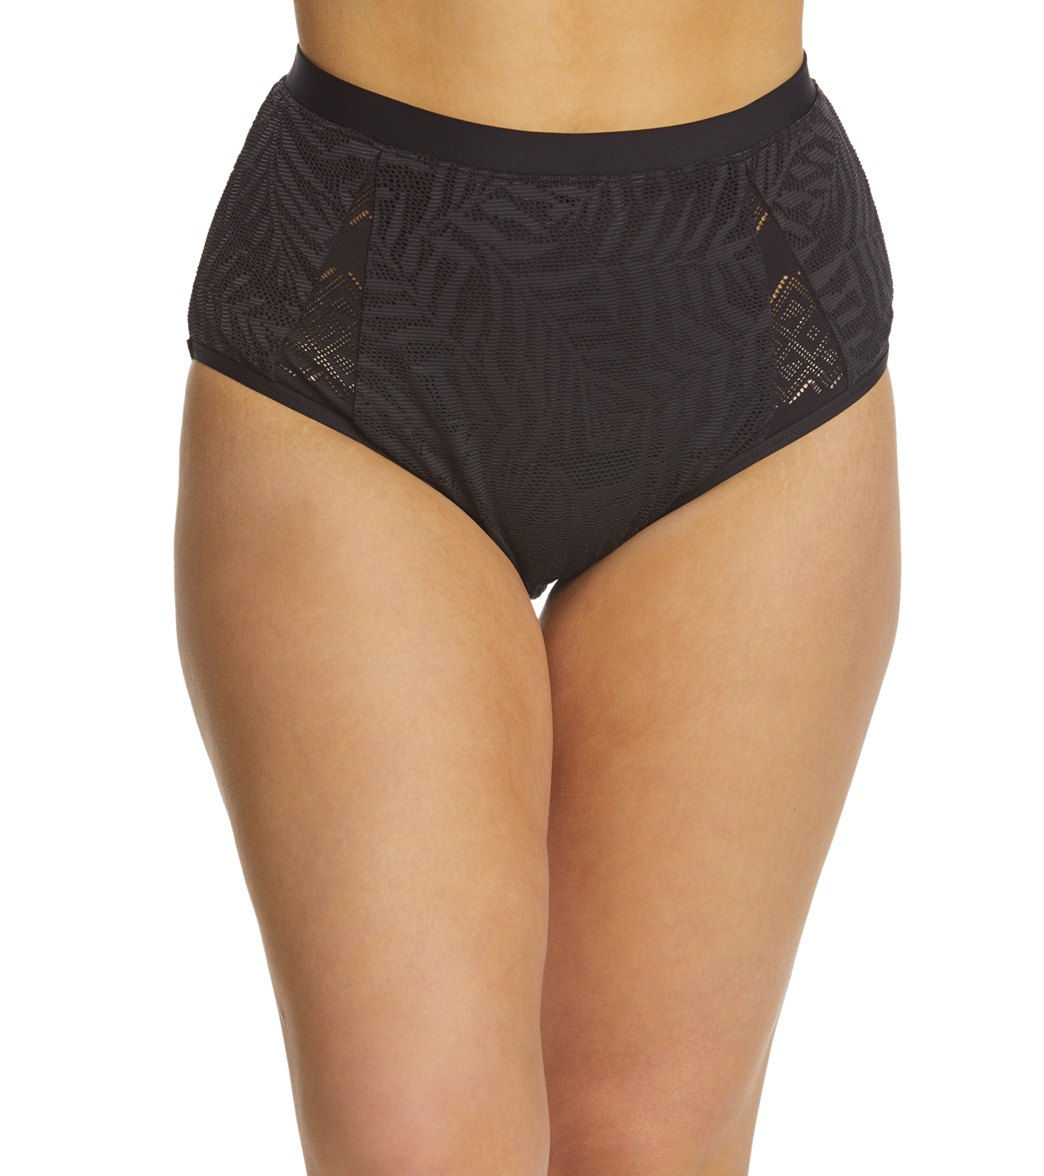 Jessica Simpson Plus Size Crochet High Waist Bikini Bottom - Black 3X - Swimoutlet.com